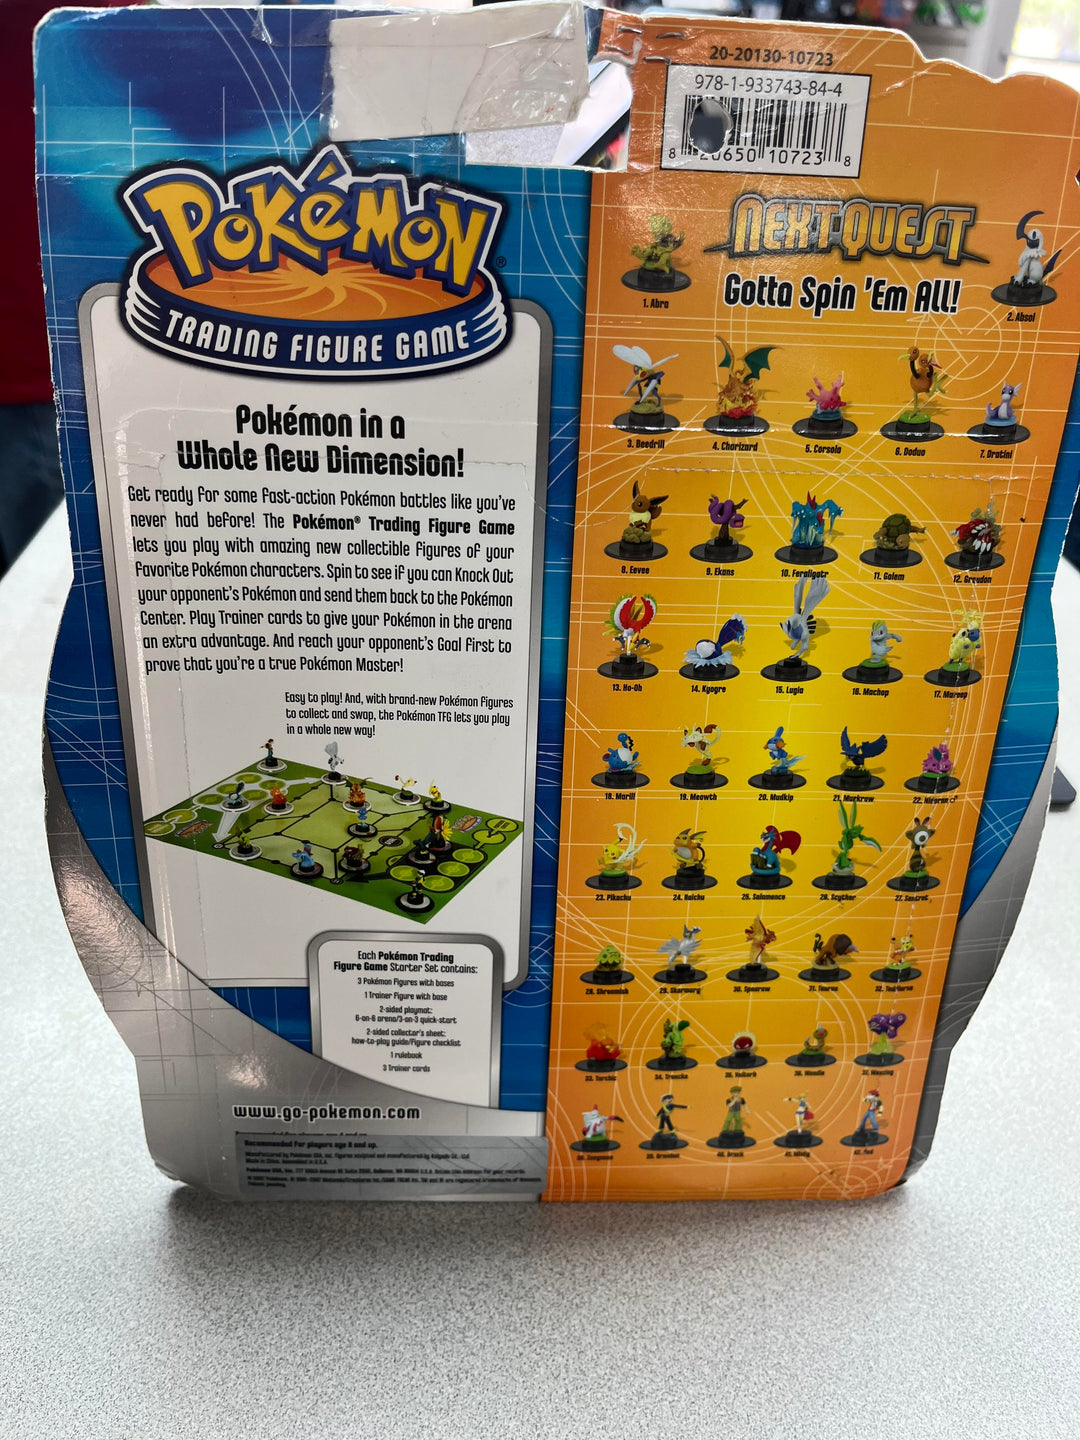 Pokémon Trading Figure Game - Riptide: 1 Player Starter Set (2007)